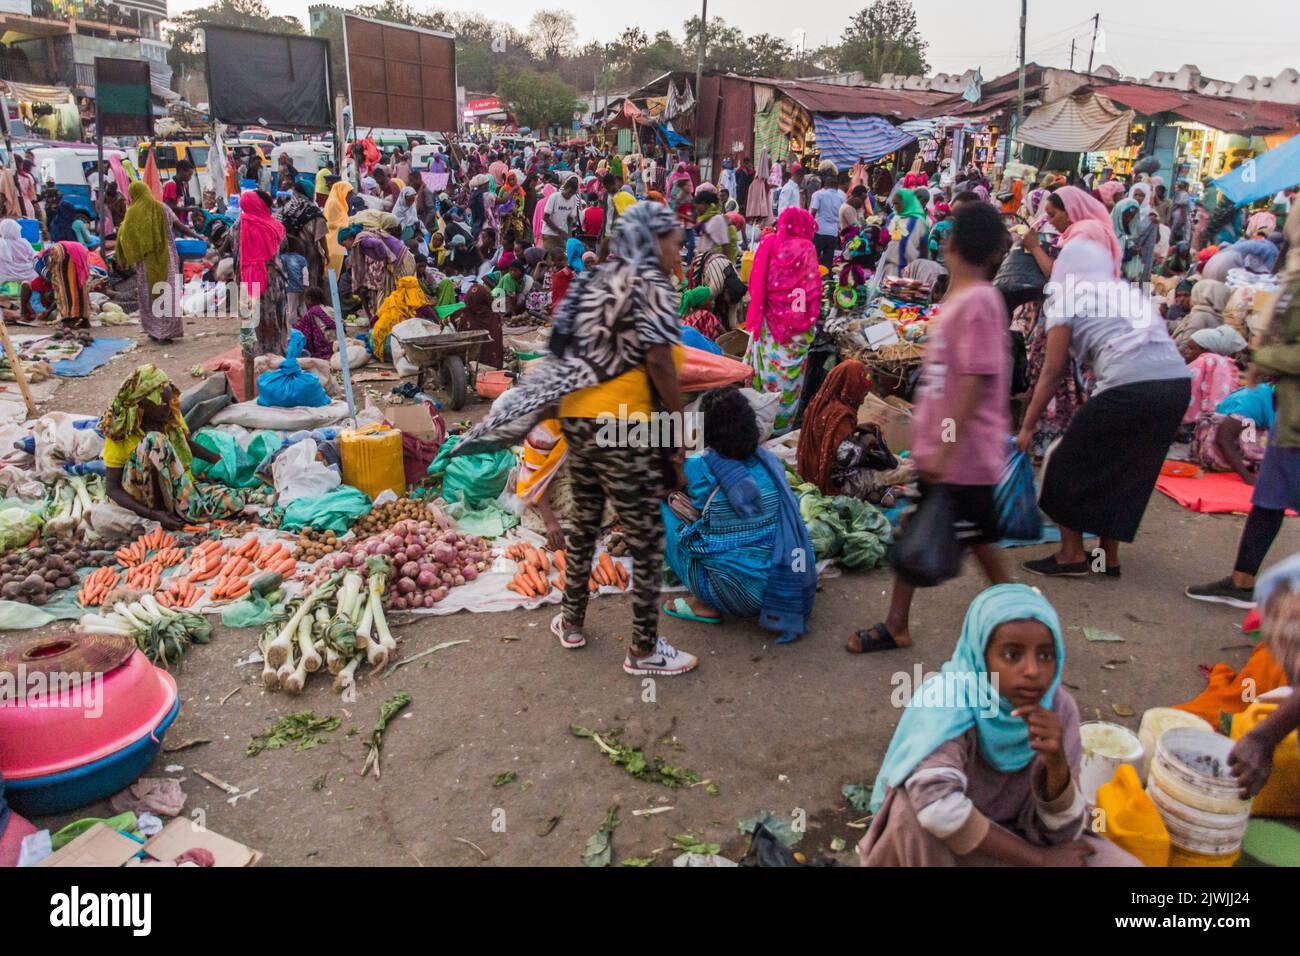 HARAR, ÄTHIOPIEN - 8. APRIL 2019: Straßenmarkt am Shoa Gate in Harar, Äthiopien Stockfoto